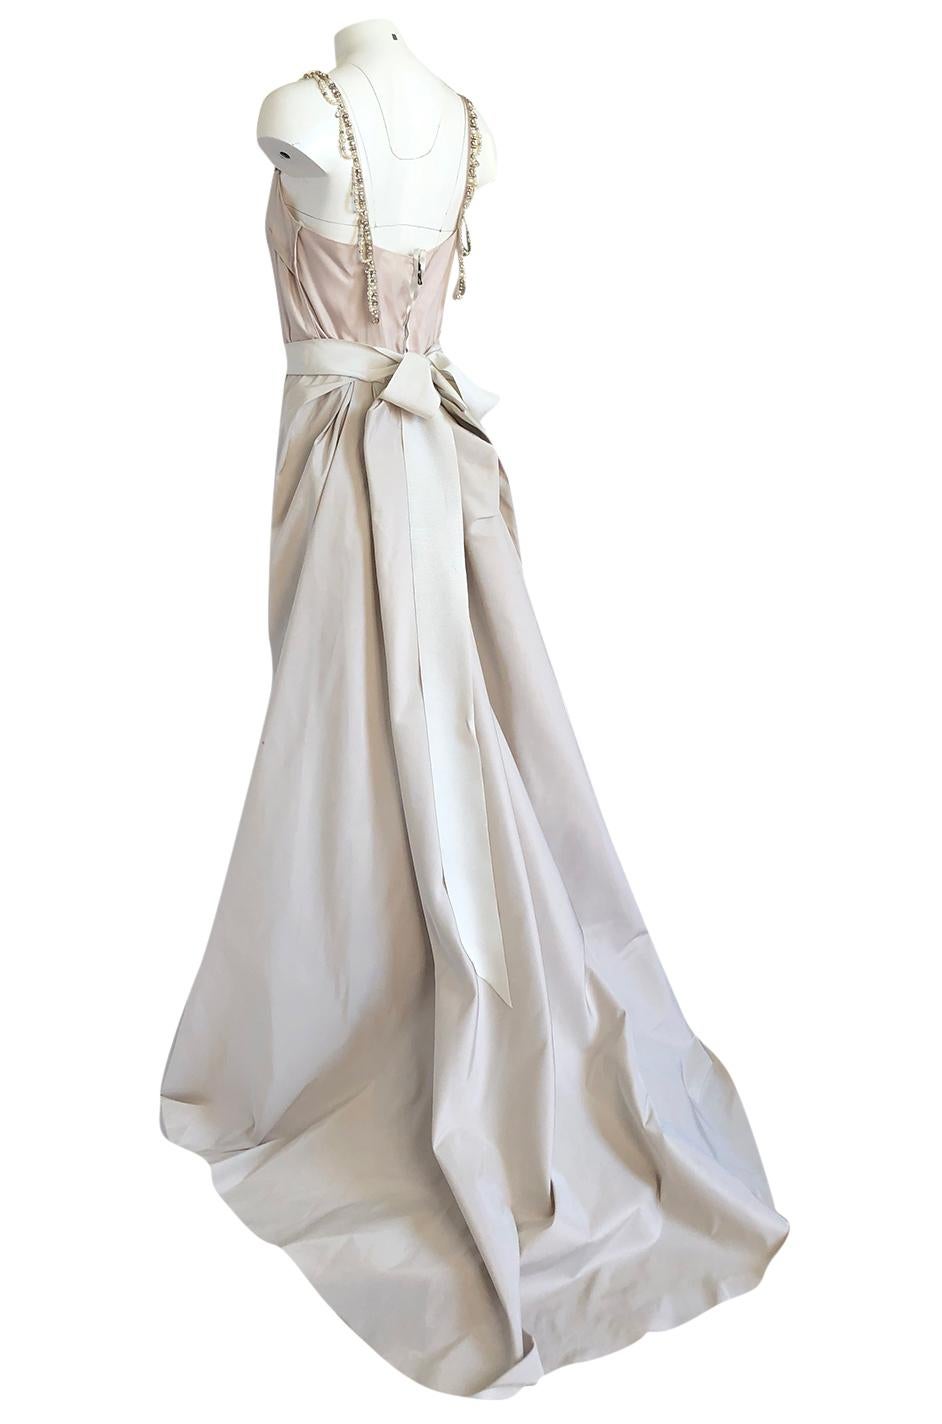 c.2012 Alber Elbaz for Lanvin Special Blanche Nude Blush Silk Wedding Gown 1